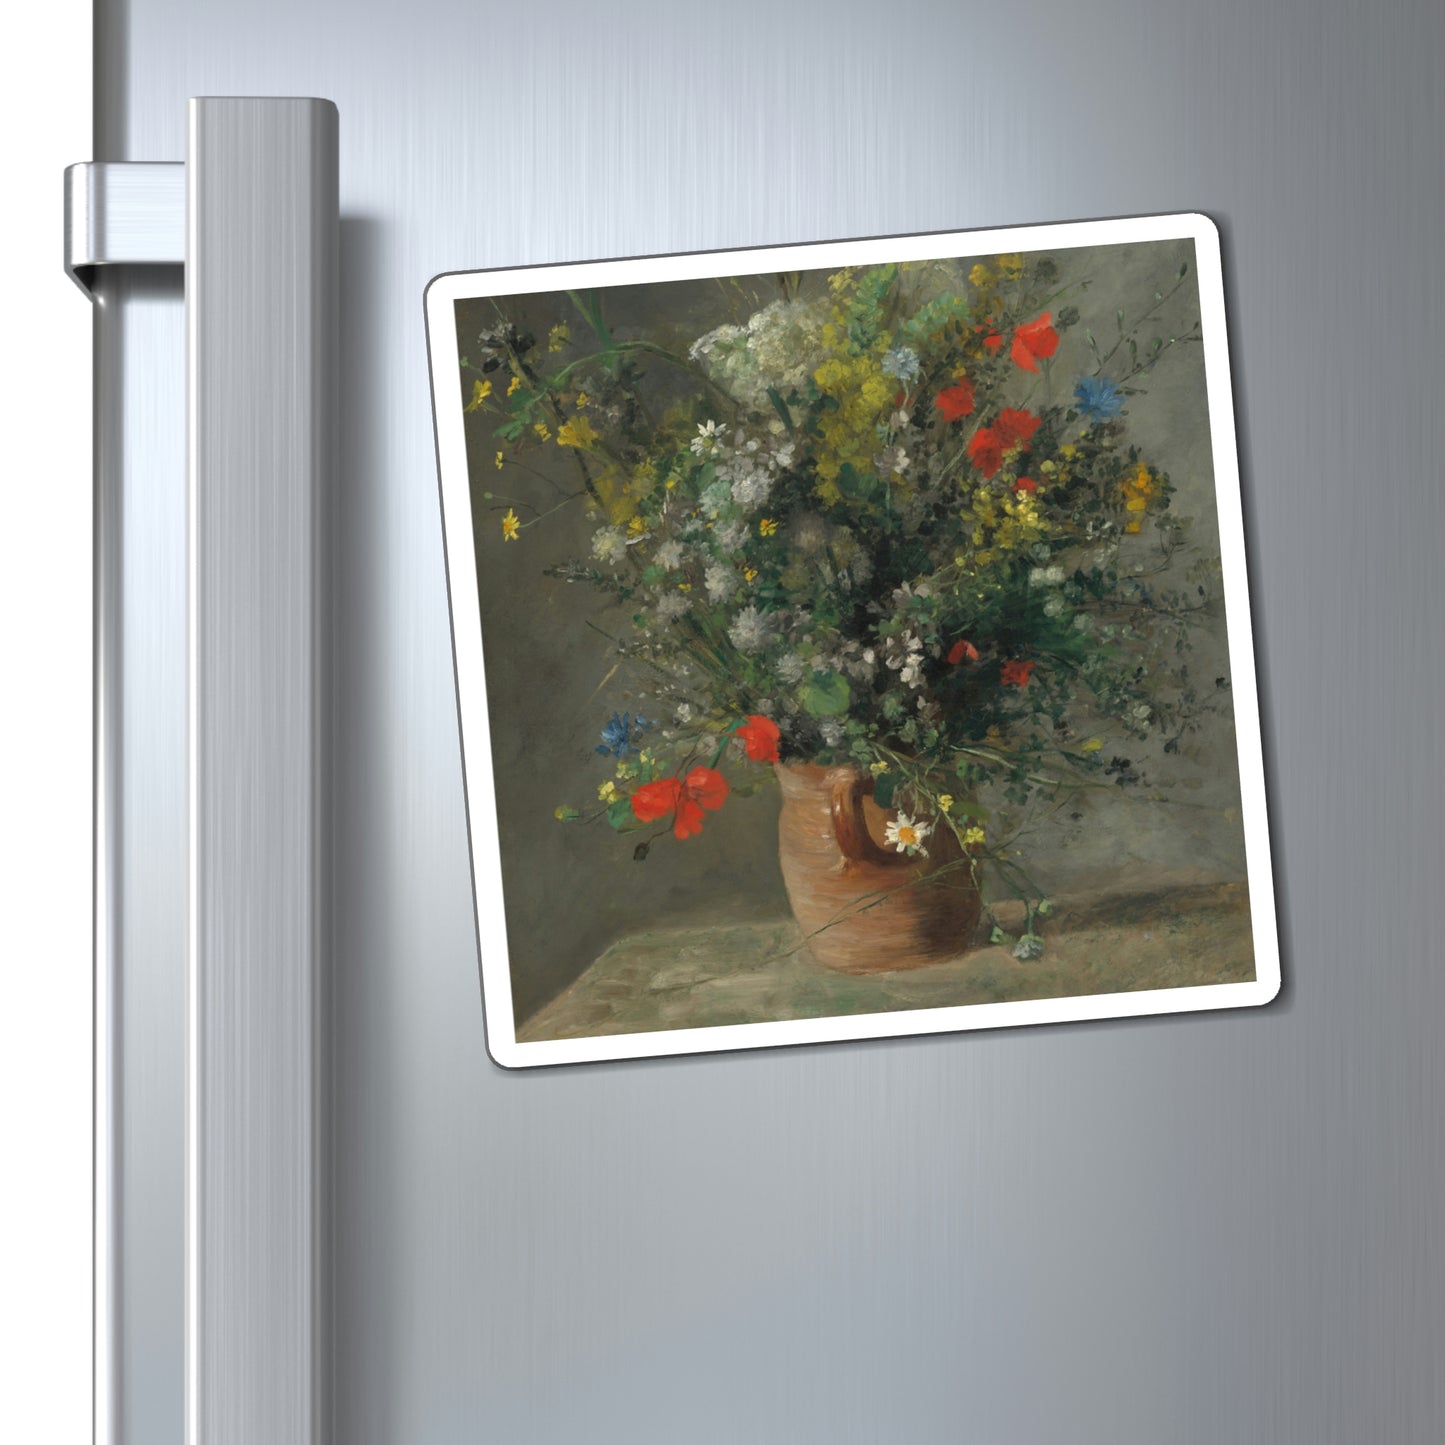 Renoir Flowers - Magnets